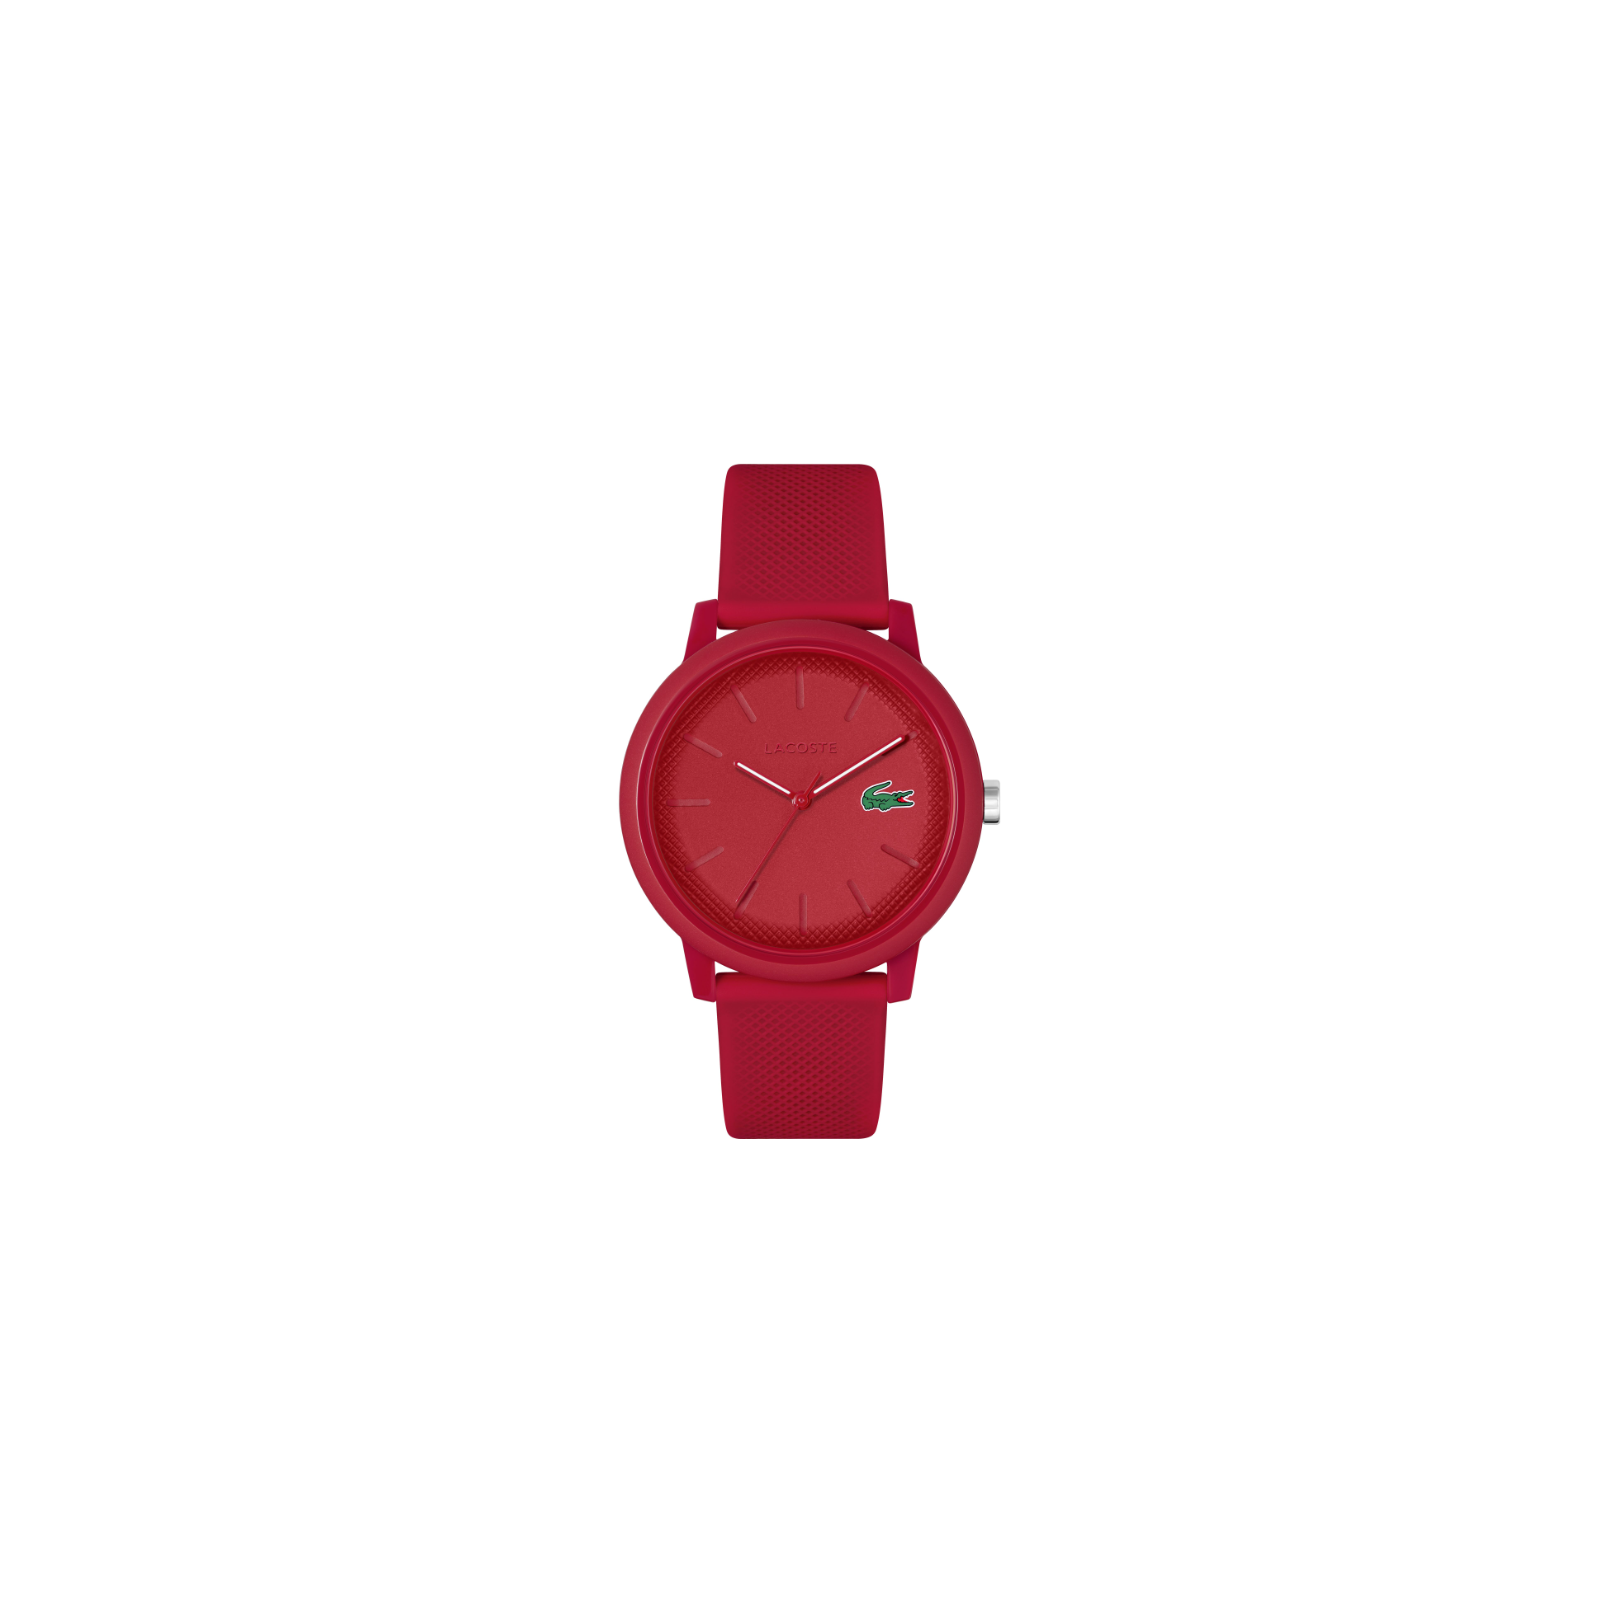 Reloj Lacoste Hombre rojo Analógico 2011173 - Joyerías Sánchez